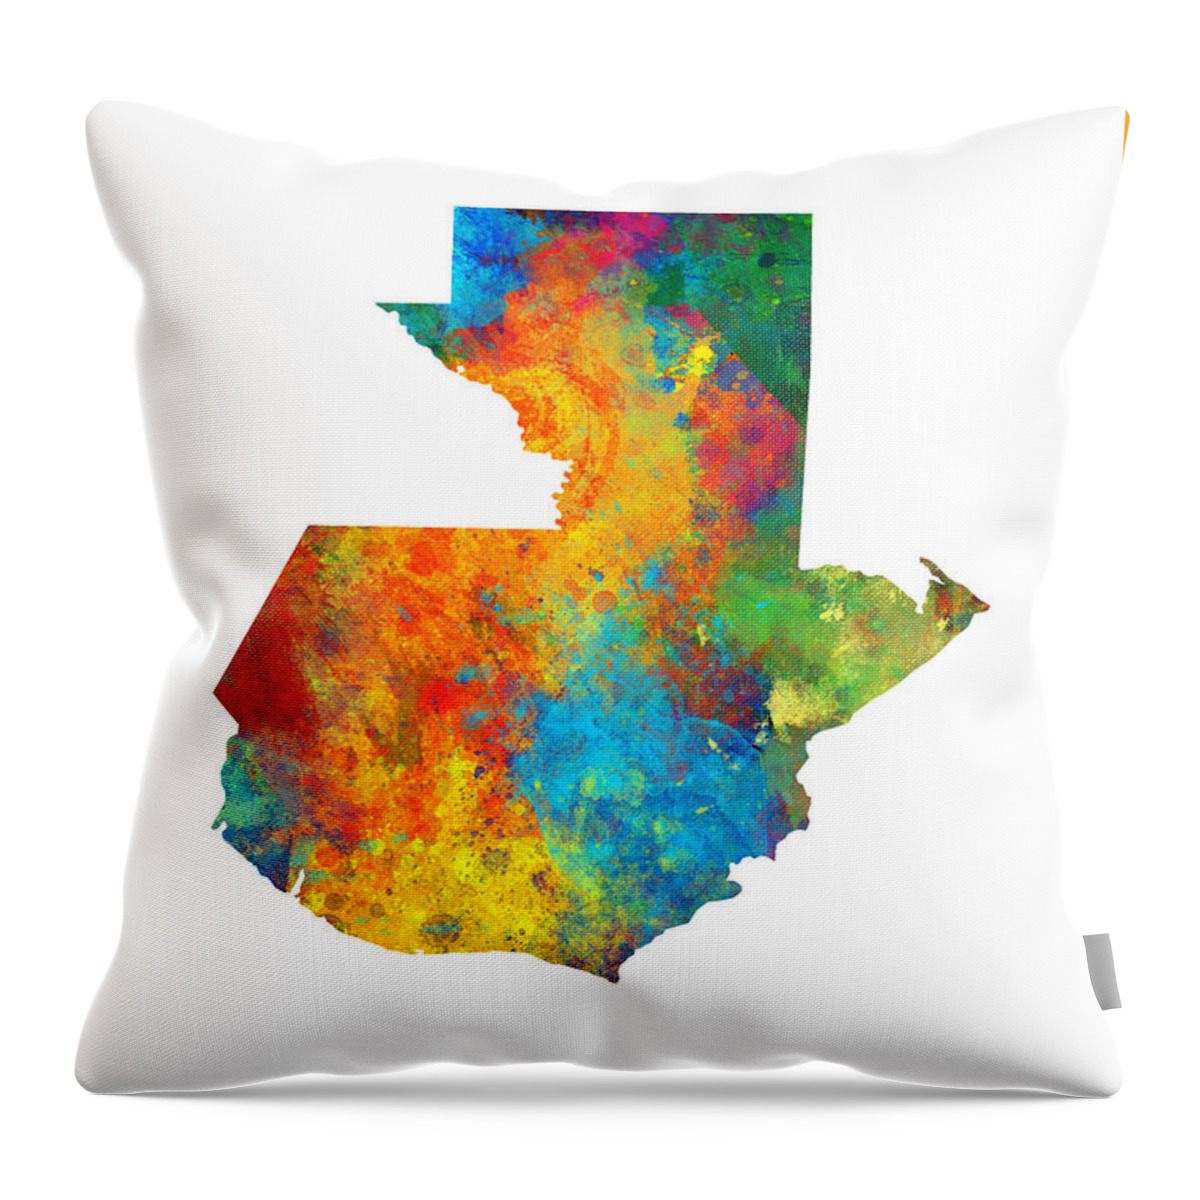 Guatemala Throw Pillow featuring the digital art Guatemala Watercolor Map by Michael Tompsett